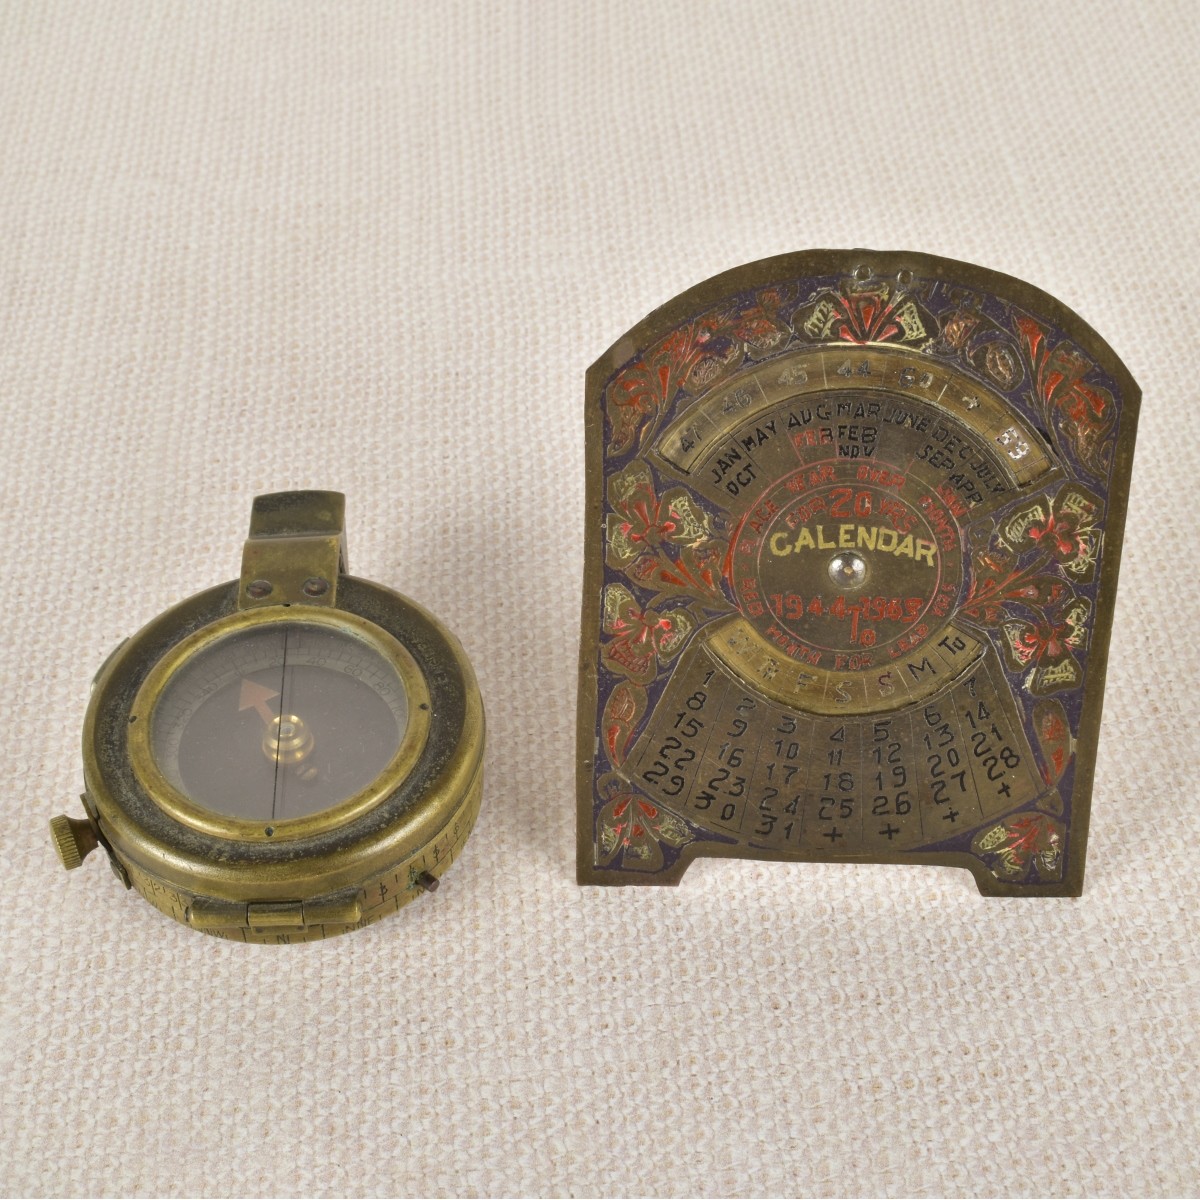 1918 Field Compass and 20 Year Calendar